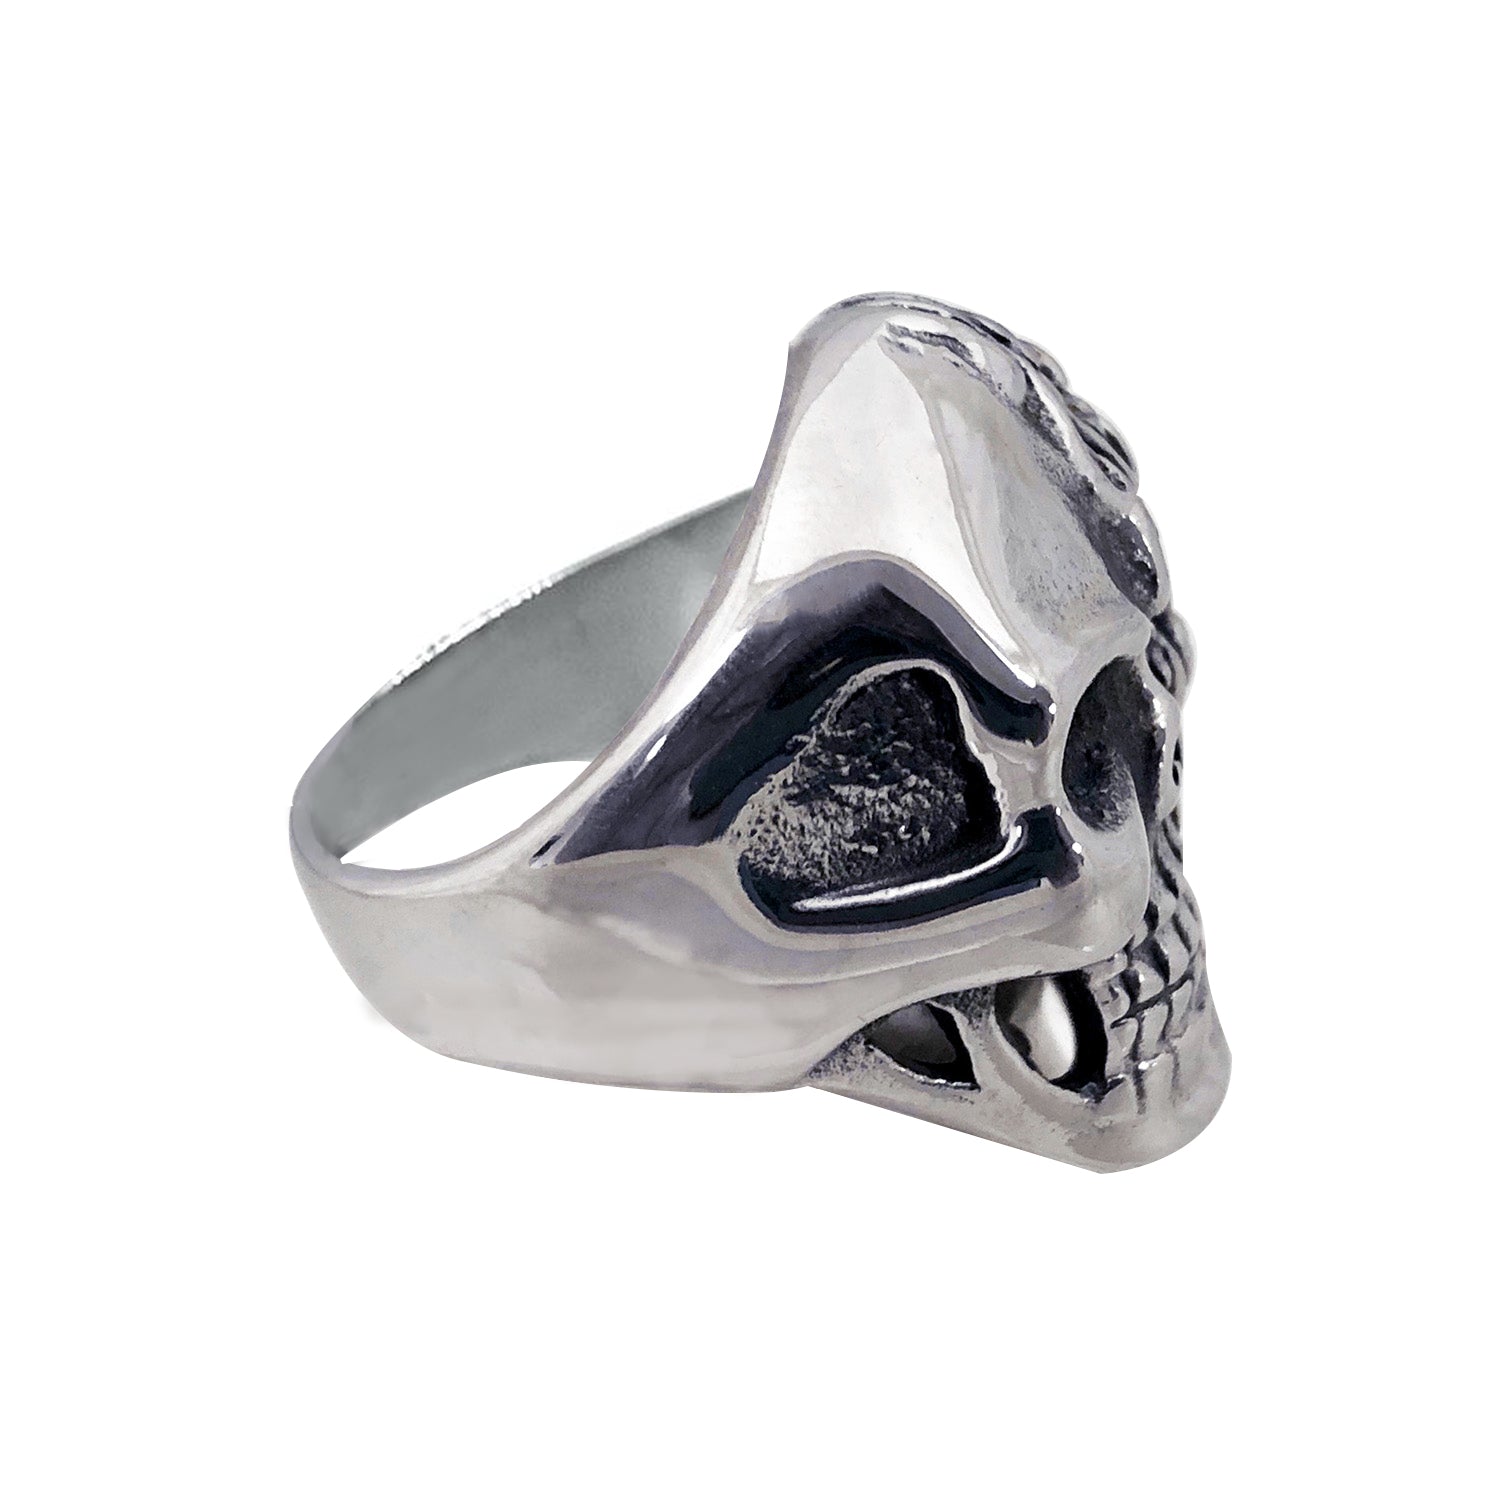 Seven Seas Pirates Flaming Skull Steel Black Enameled Ring (US Size 8 R176)